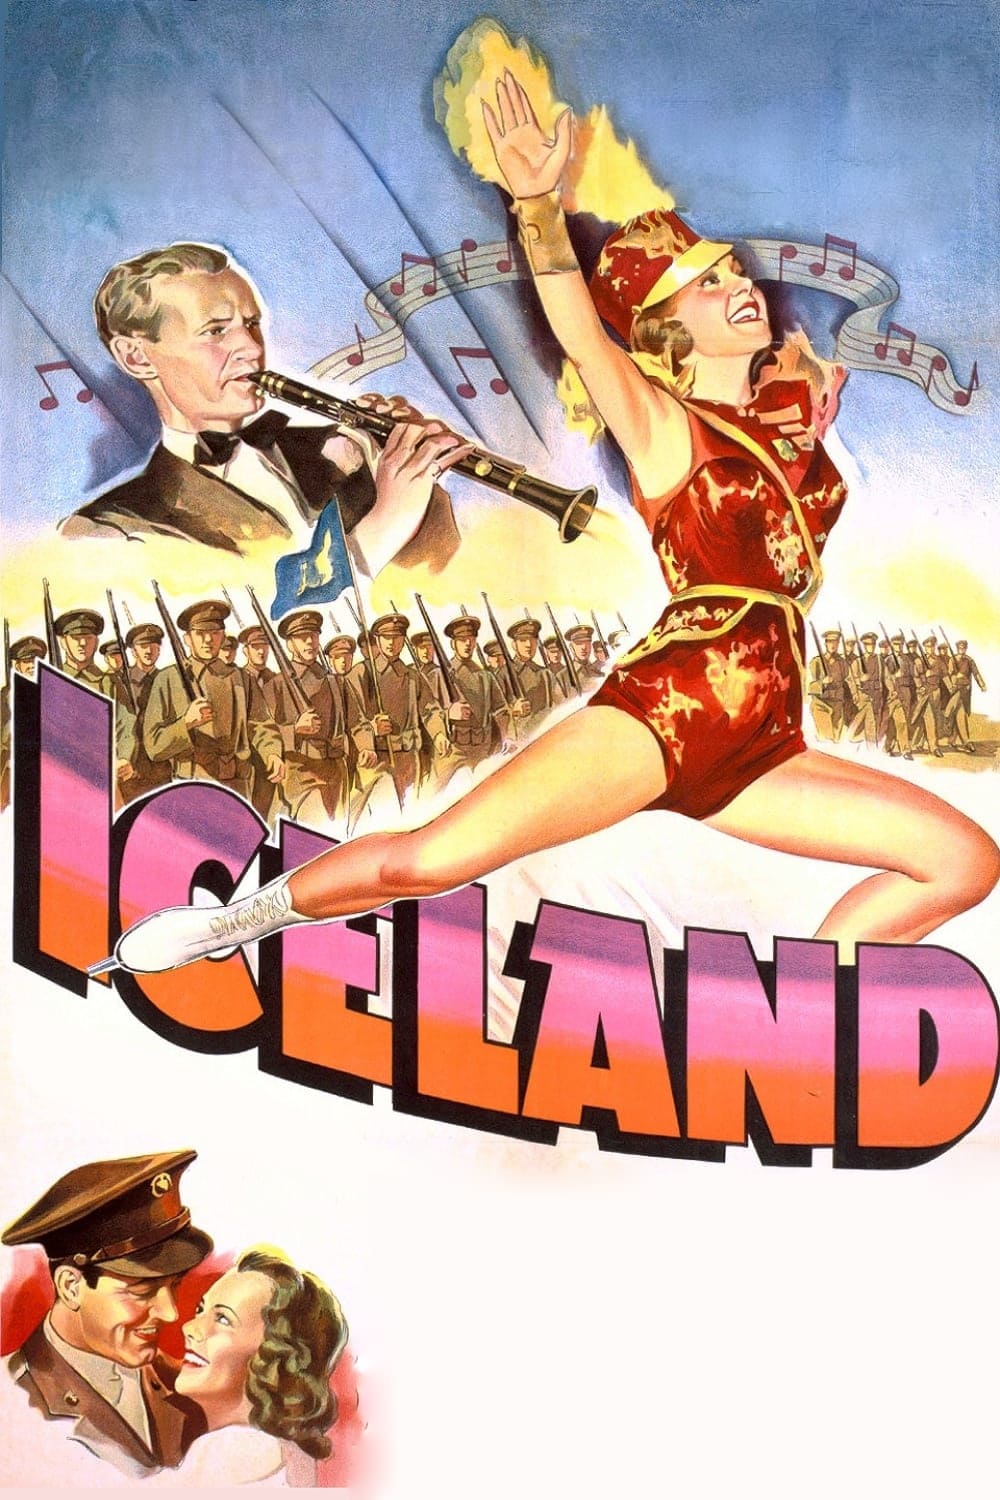 Iceland (1942)